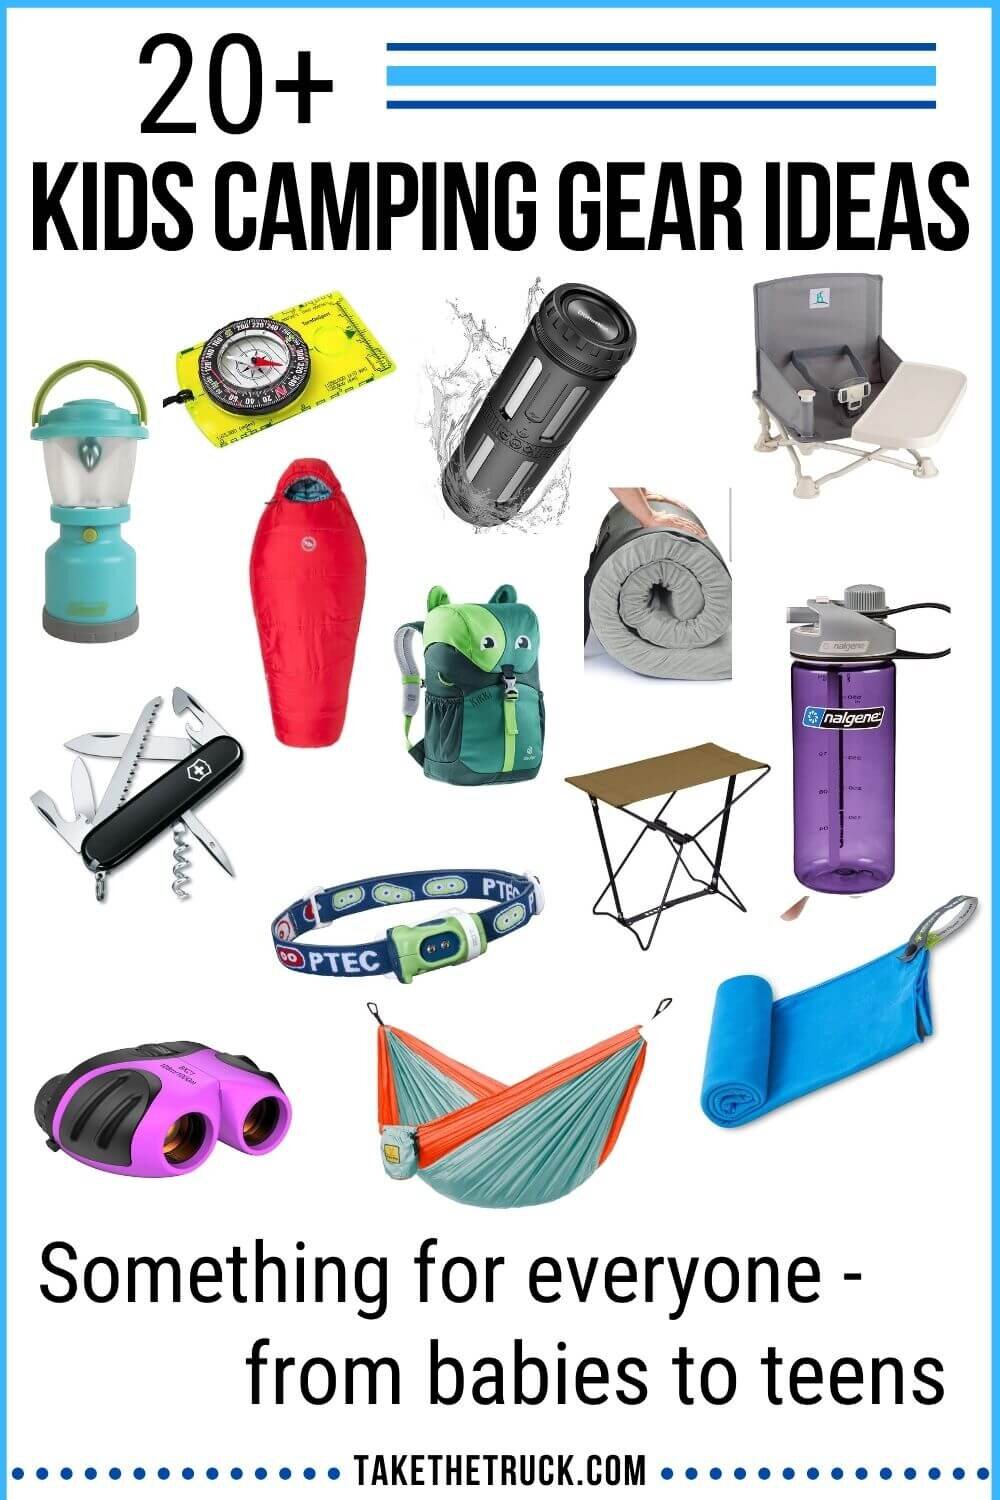 https://images.squarespace-cdn.com/content/v1/5bbd67d490f9042649da280e/1611067751045-EBXH716TAS44NO24GZ17/outdoor-gifts-camping-gear-for-kids.jpg